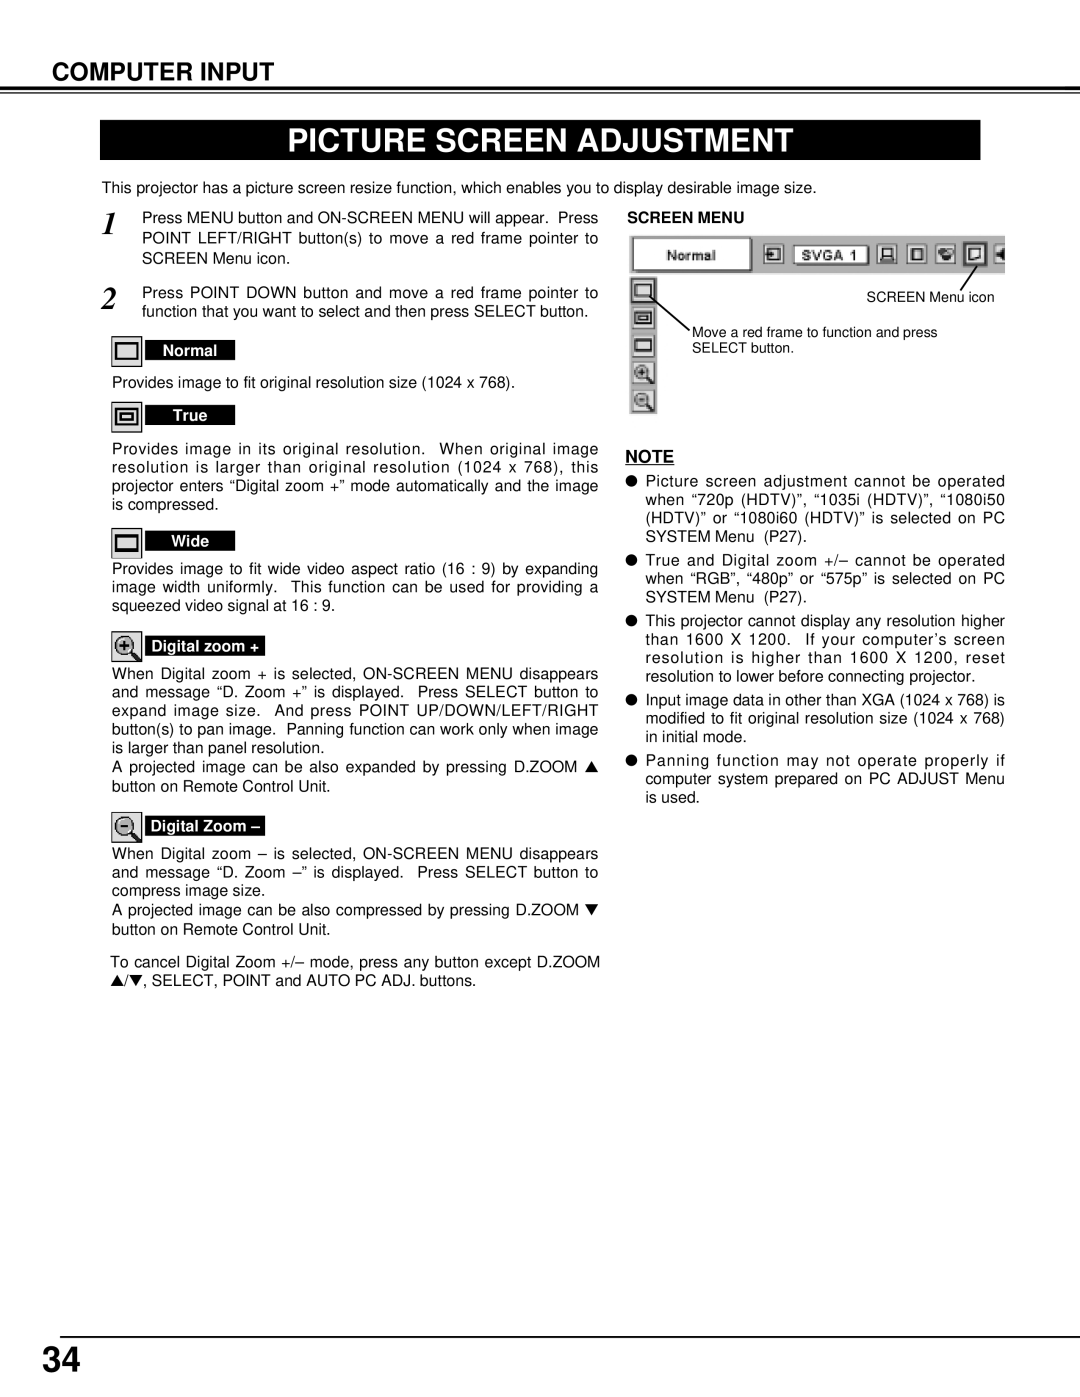 Eiki LC-XT3 instruction manual Picture Screen Adjustment, Screen Menu 